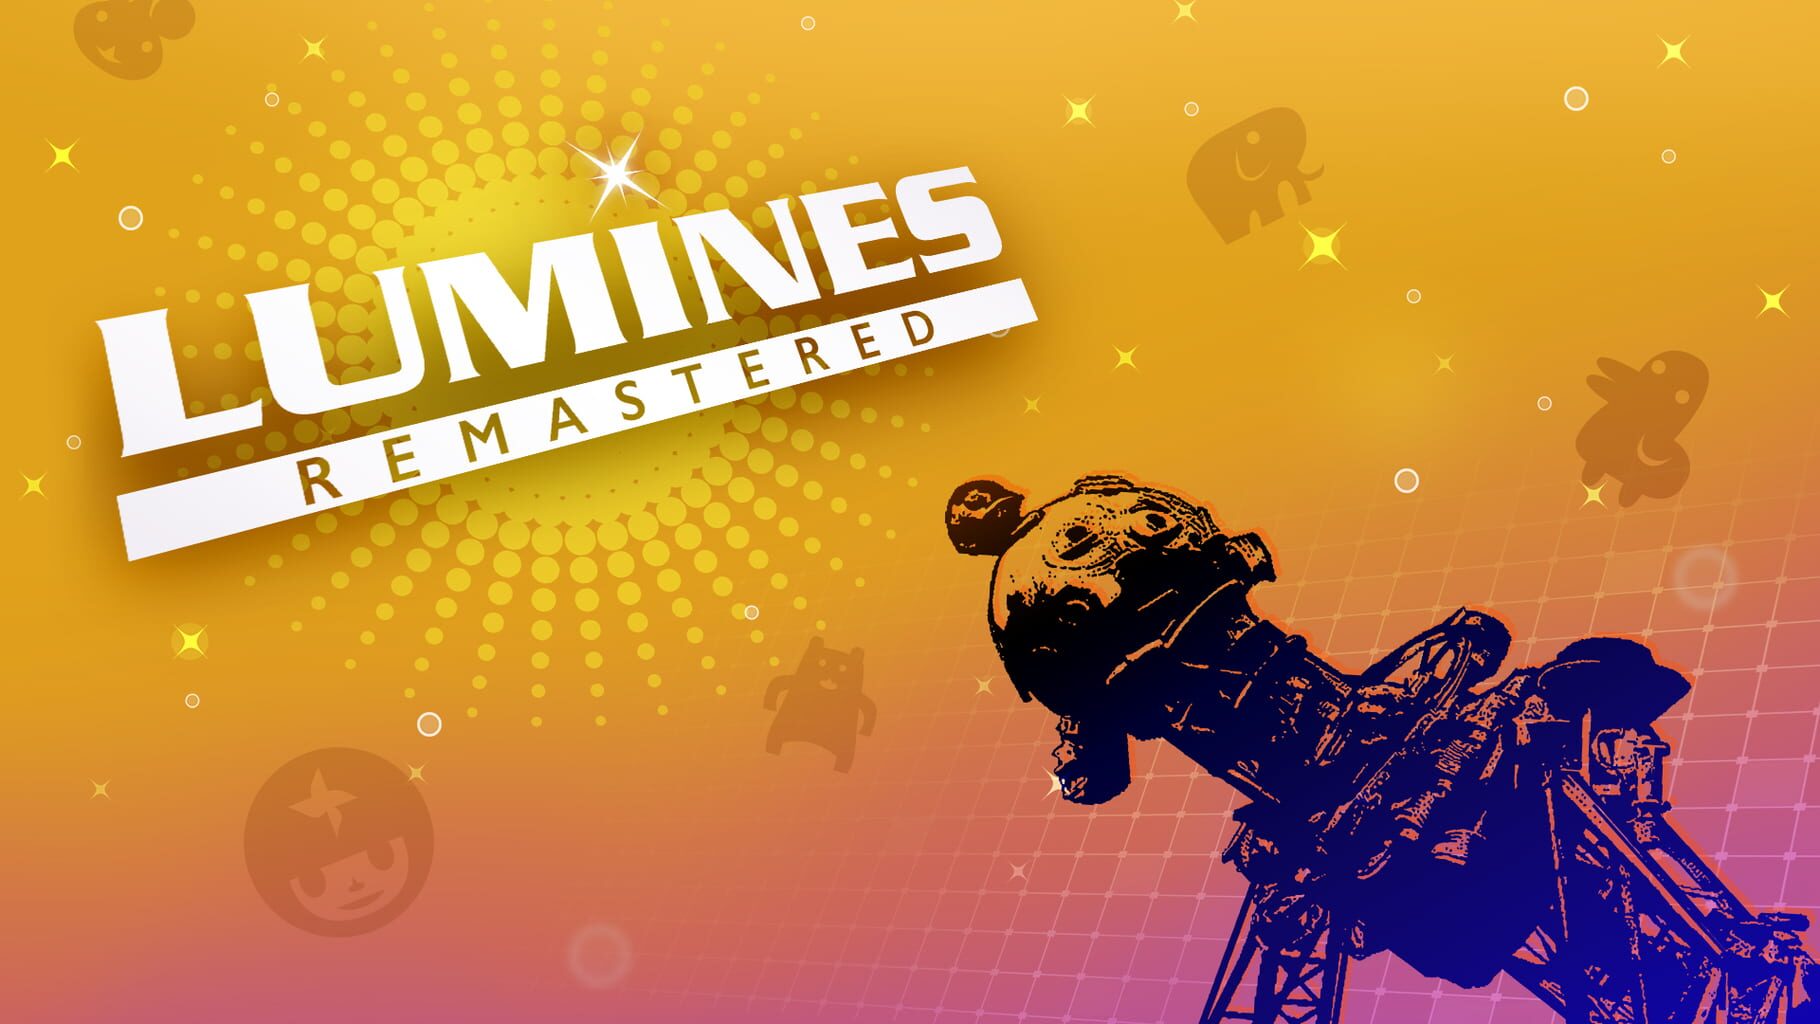 Artwork for Lumines Remastered